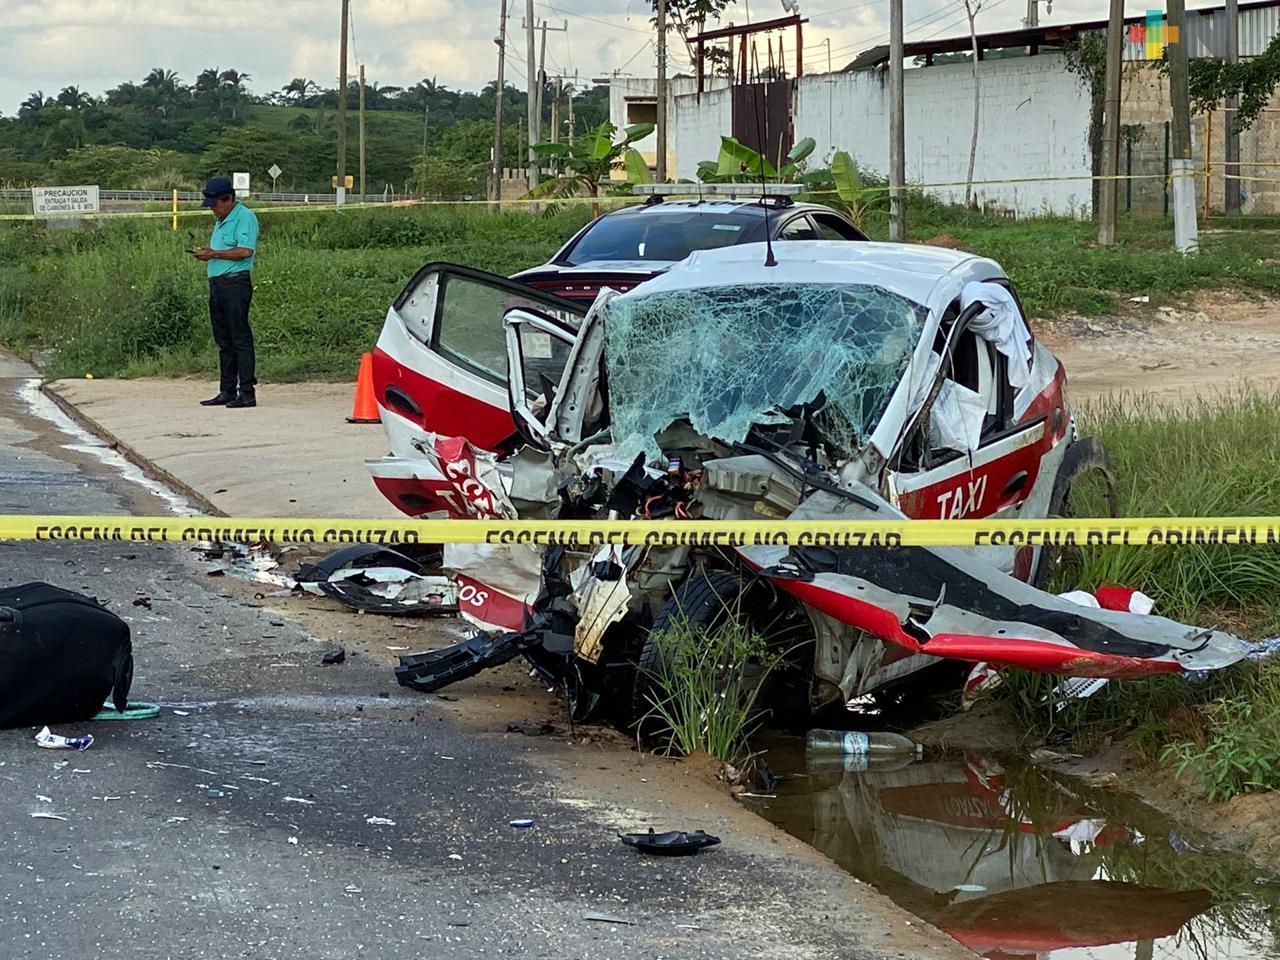 Fuerte accidente en la carretera Coatzacoalcos-Villahermosa; muere taxista